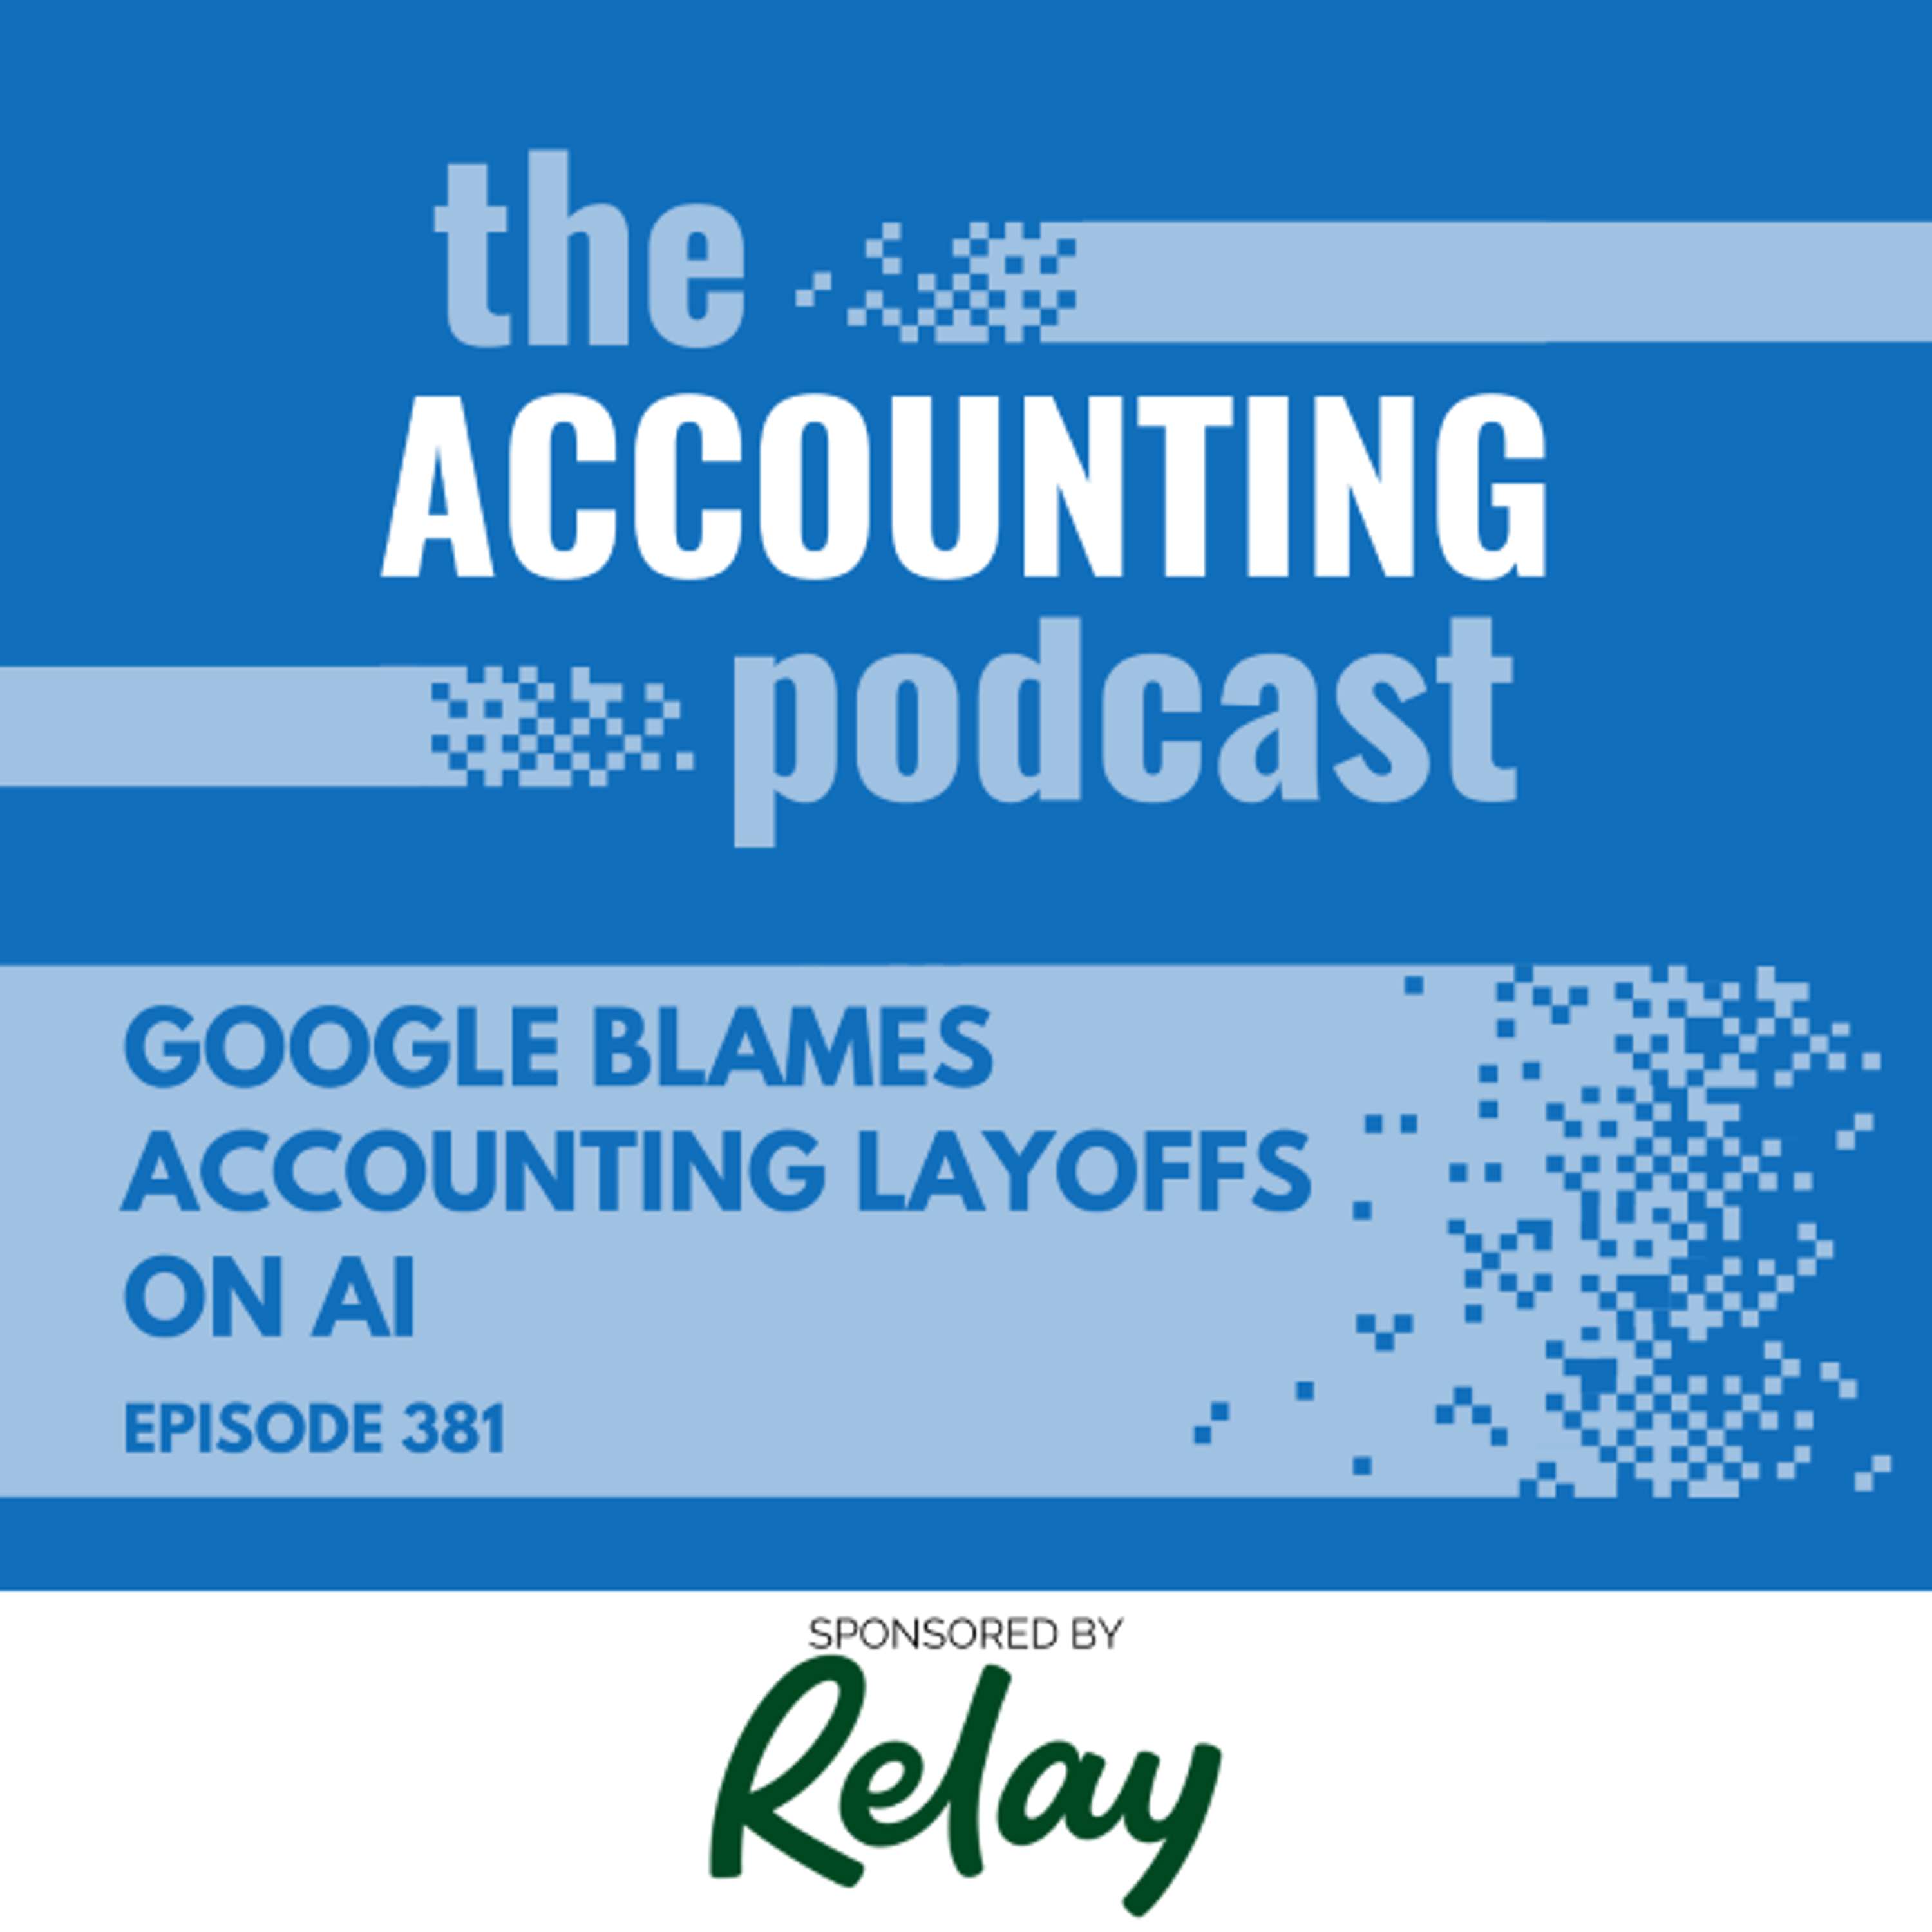 Google Blames Accounting Layoffs on AI